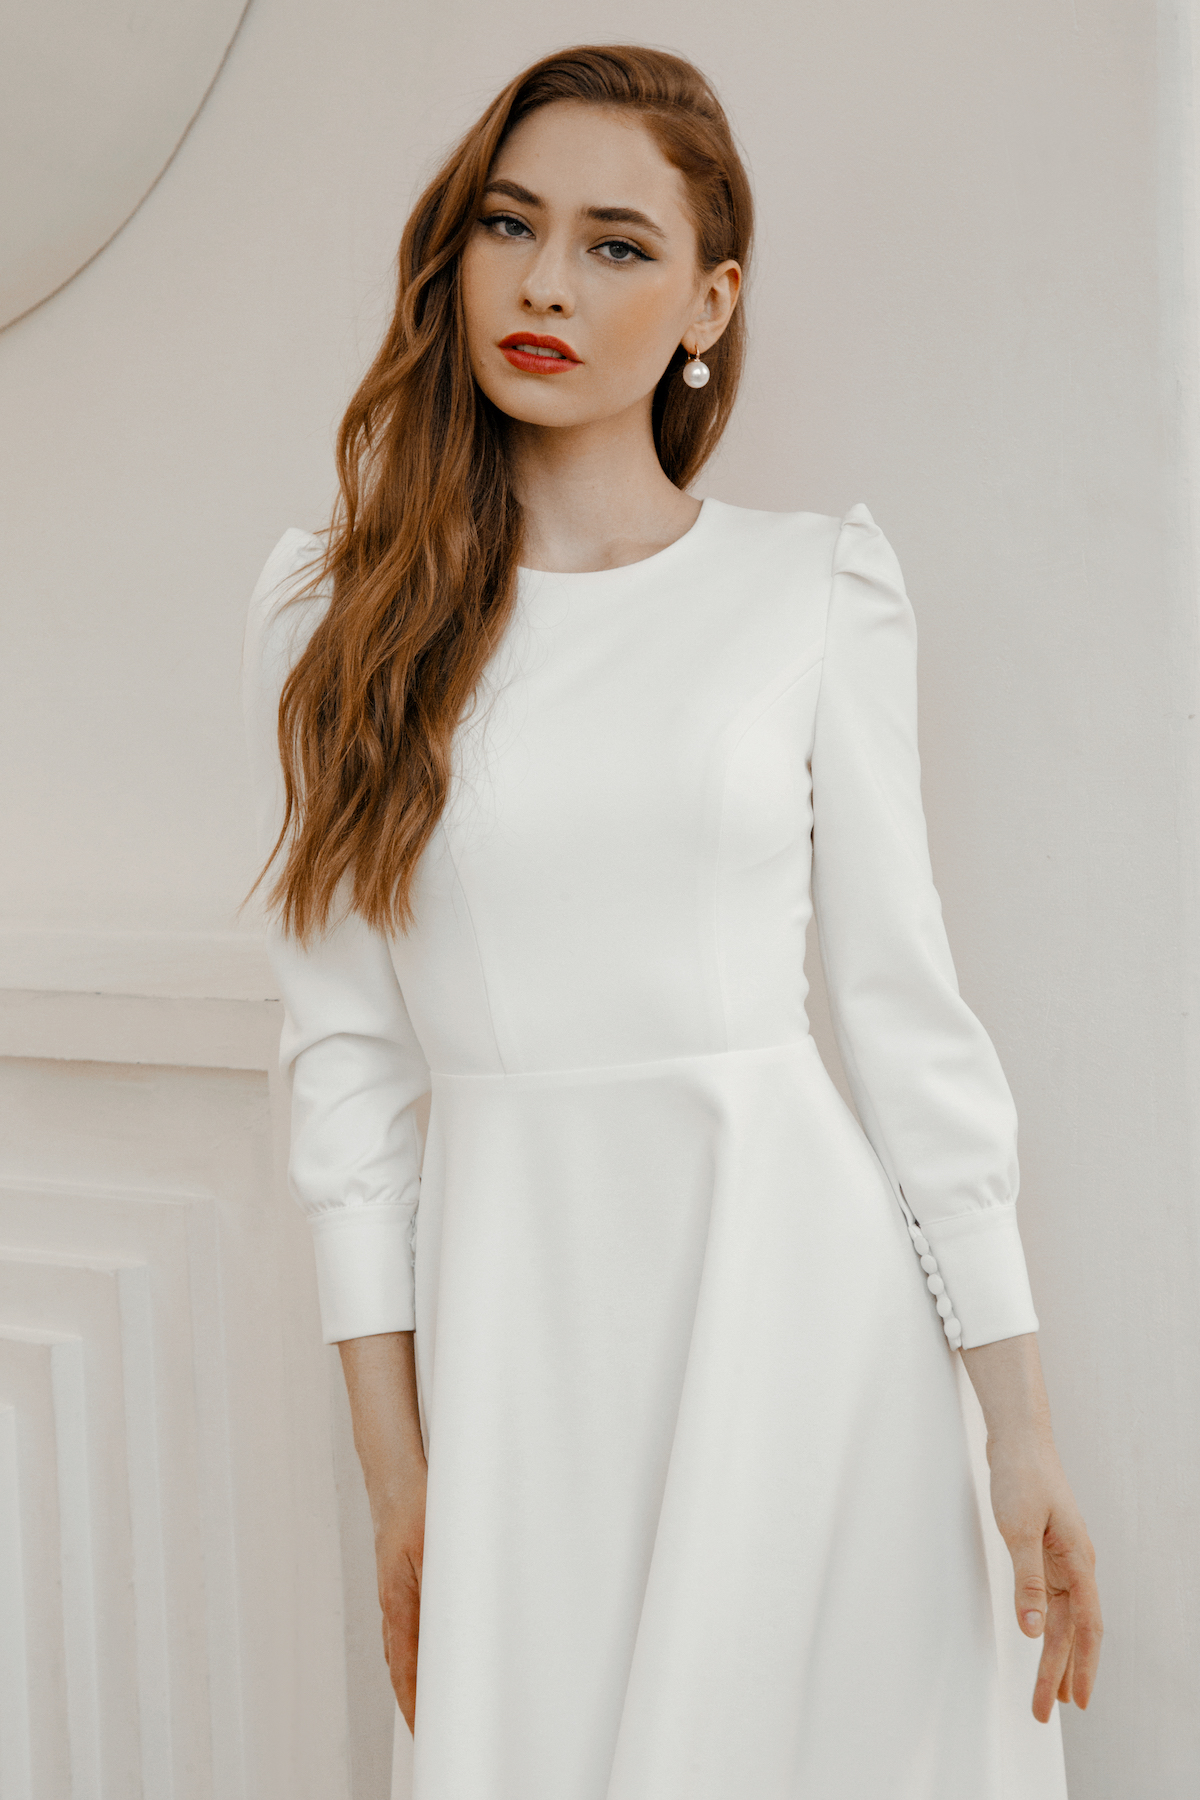 Tea length wedding dress with sleeves